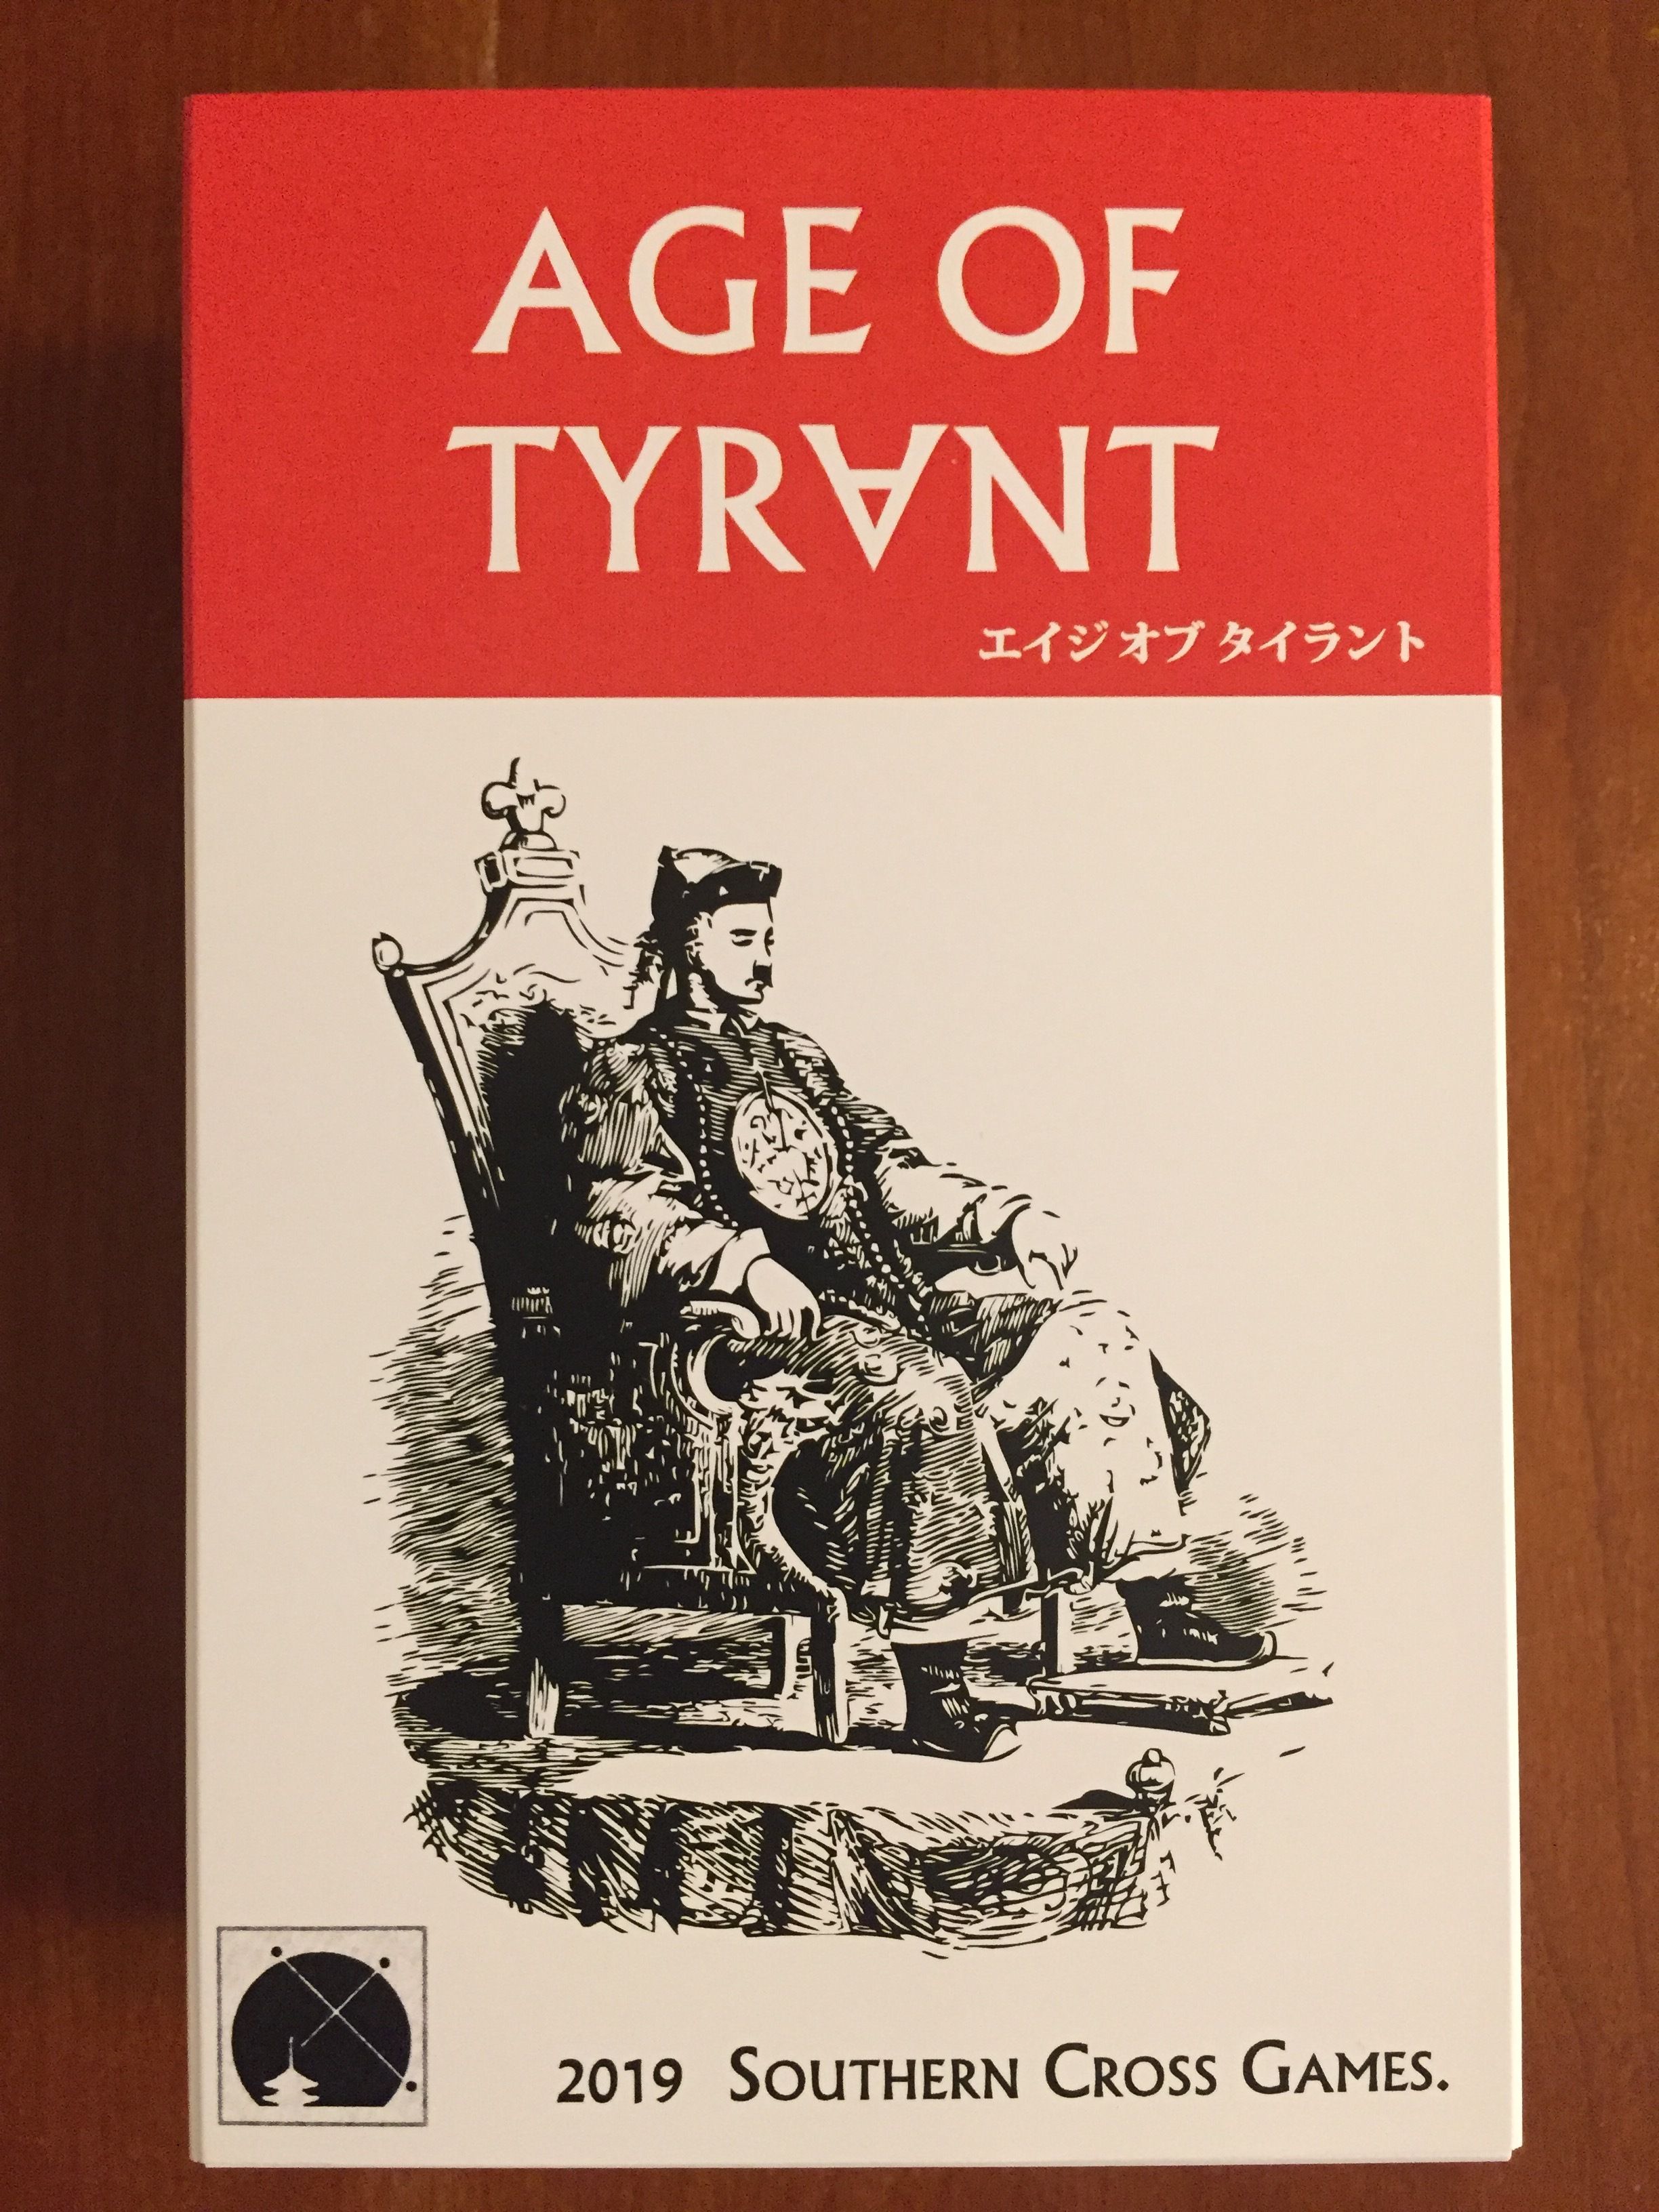 Age of Tyrant